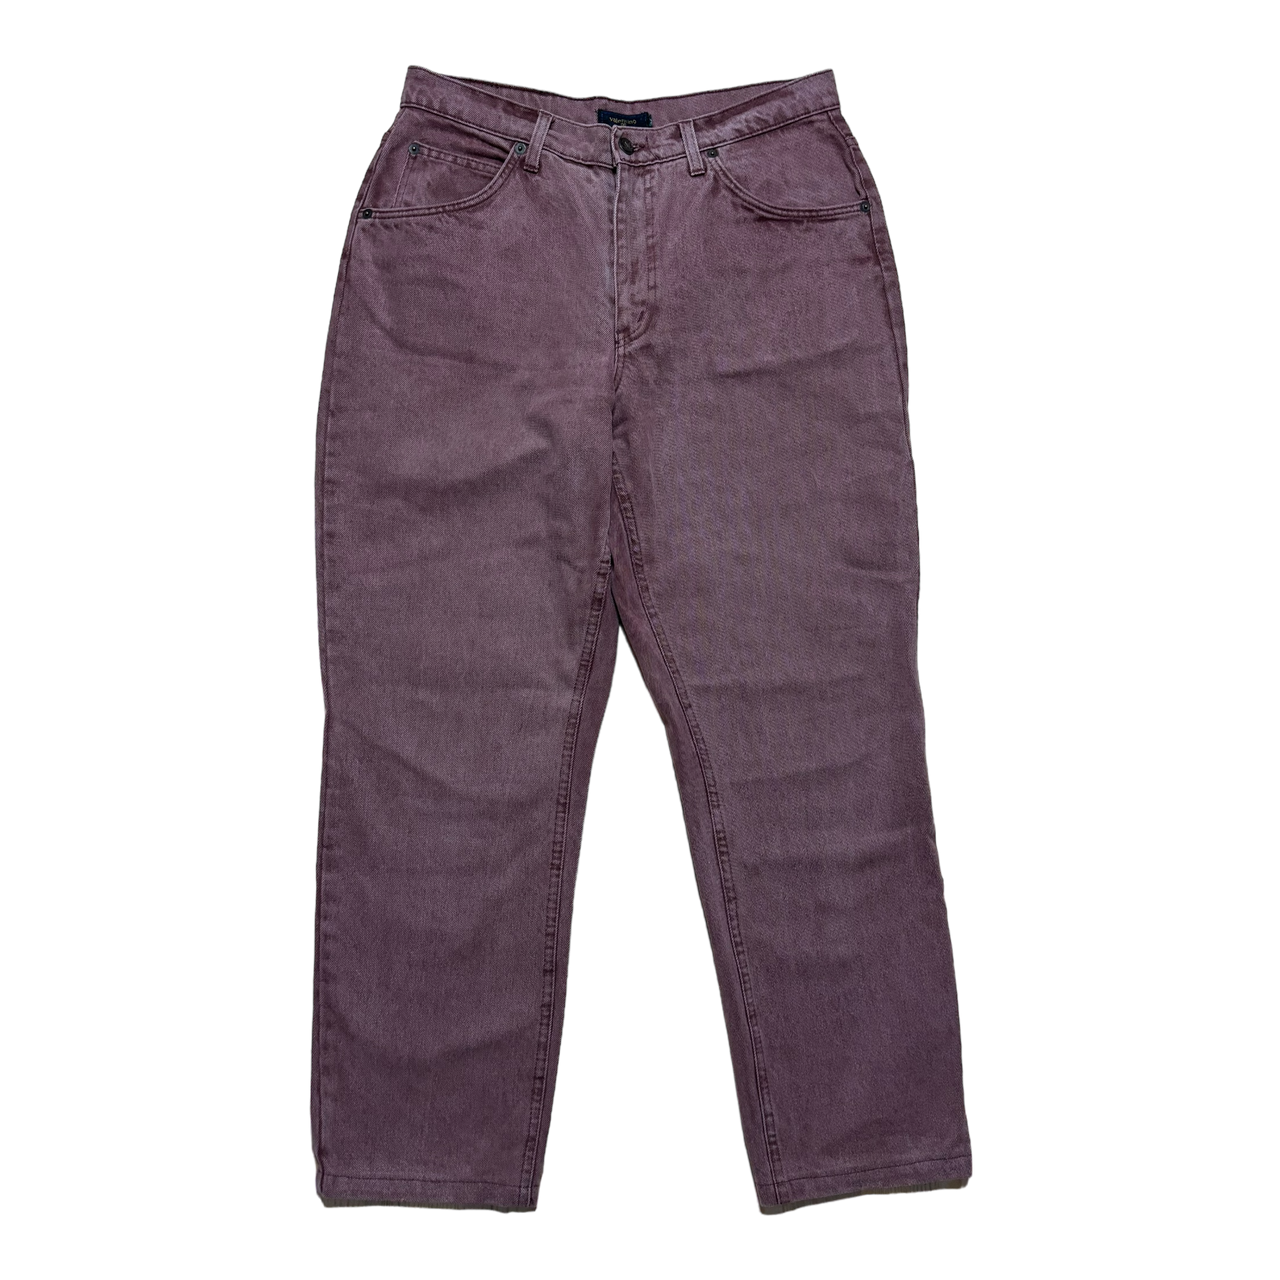 Valentino, Brick Red Jeans (32 x 28)